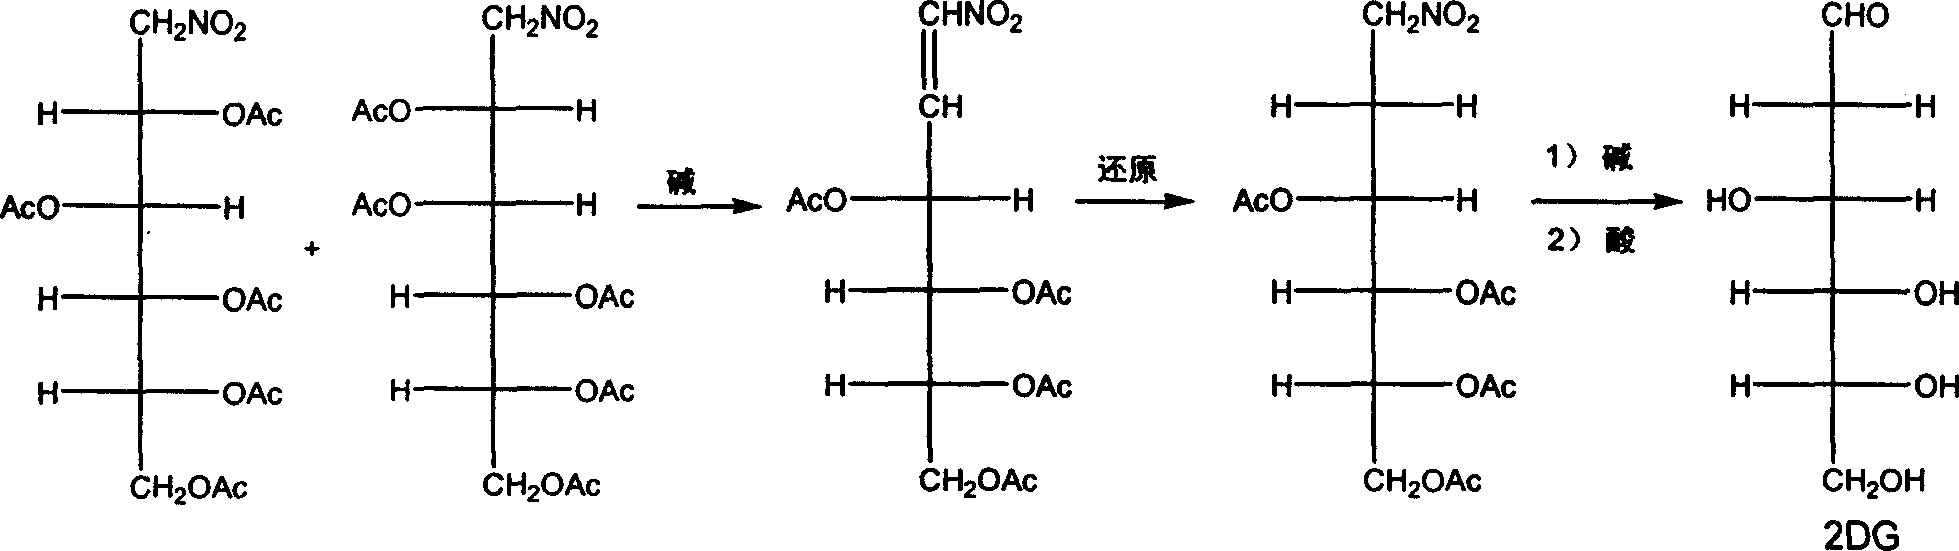 Method for preparing z-deoxy-D-glucose